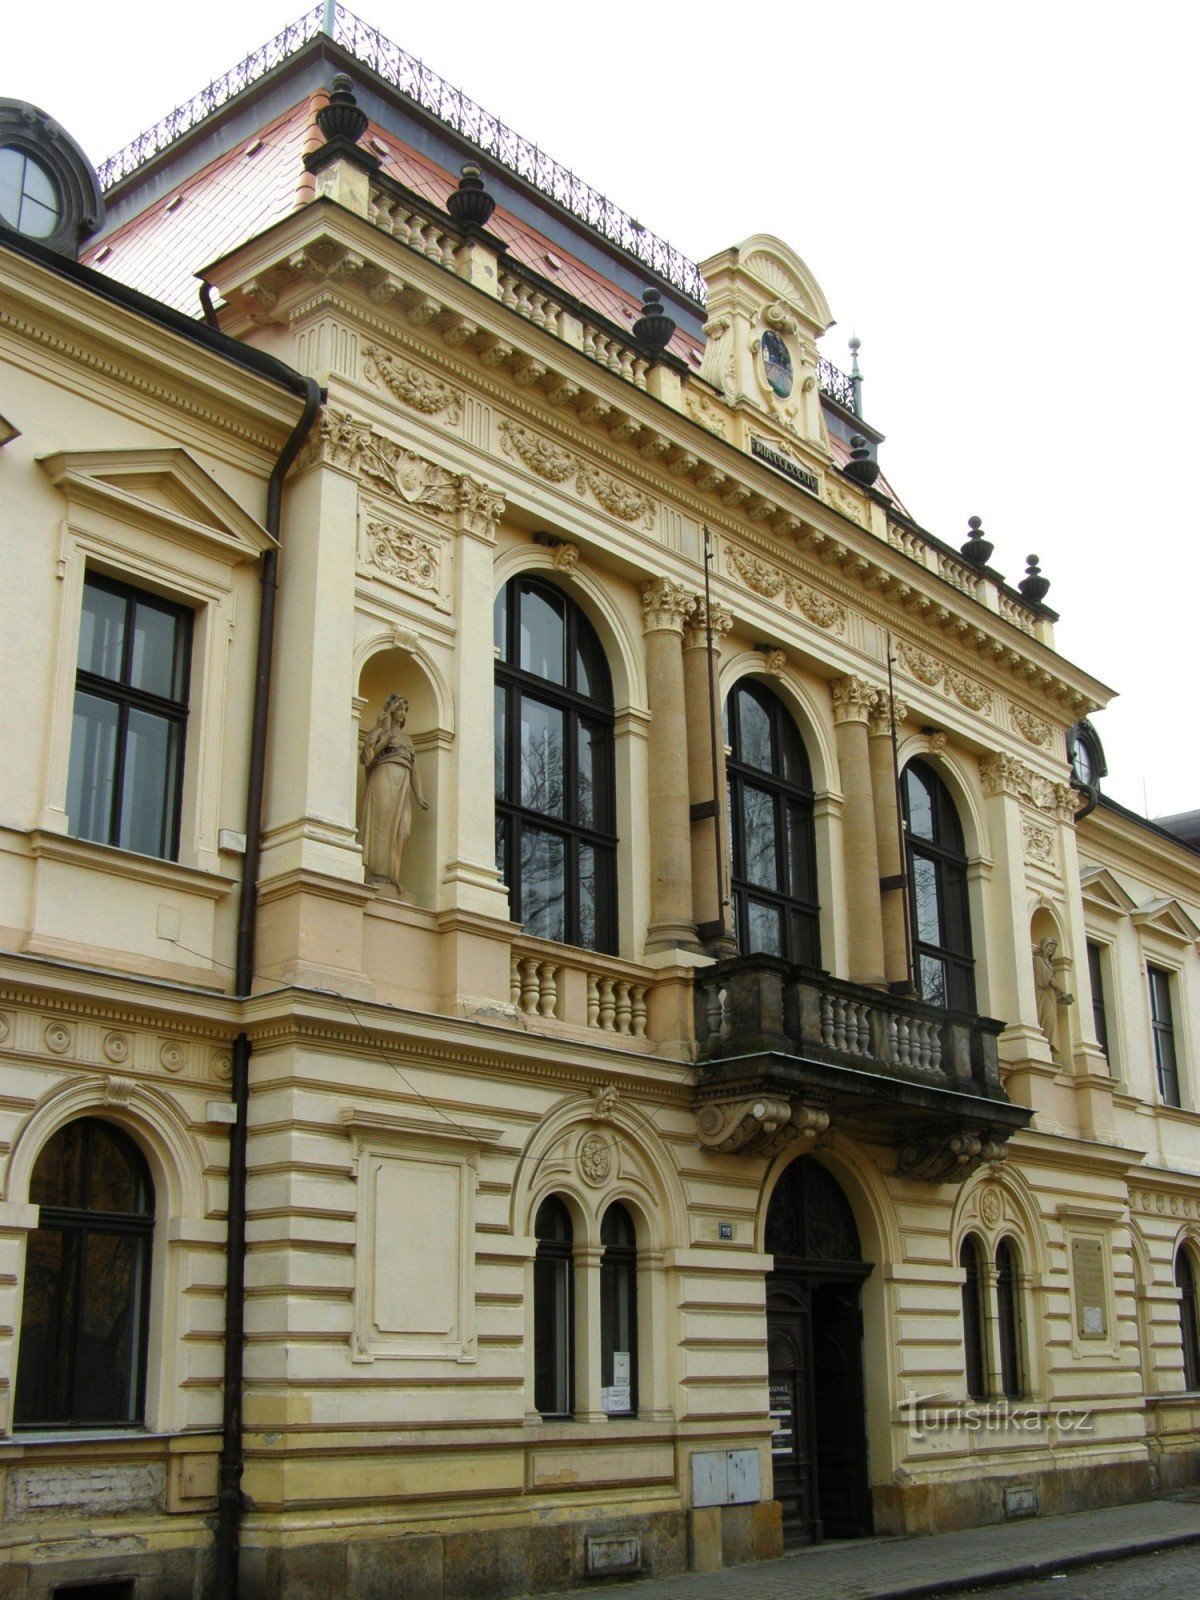 Josefov - 新市庁舎、博物館